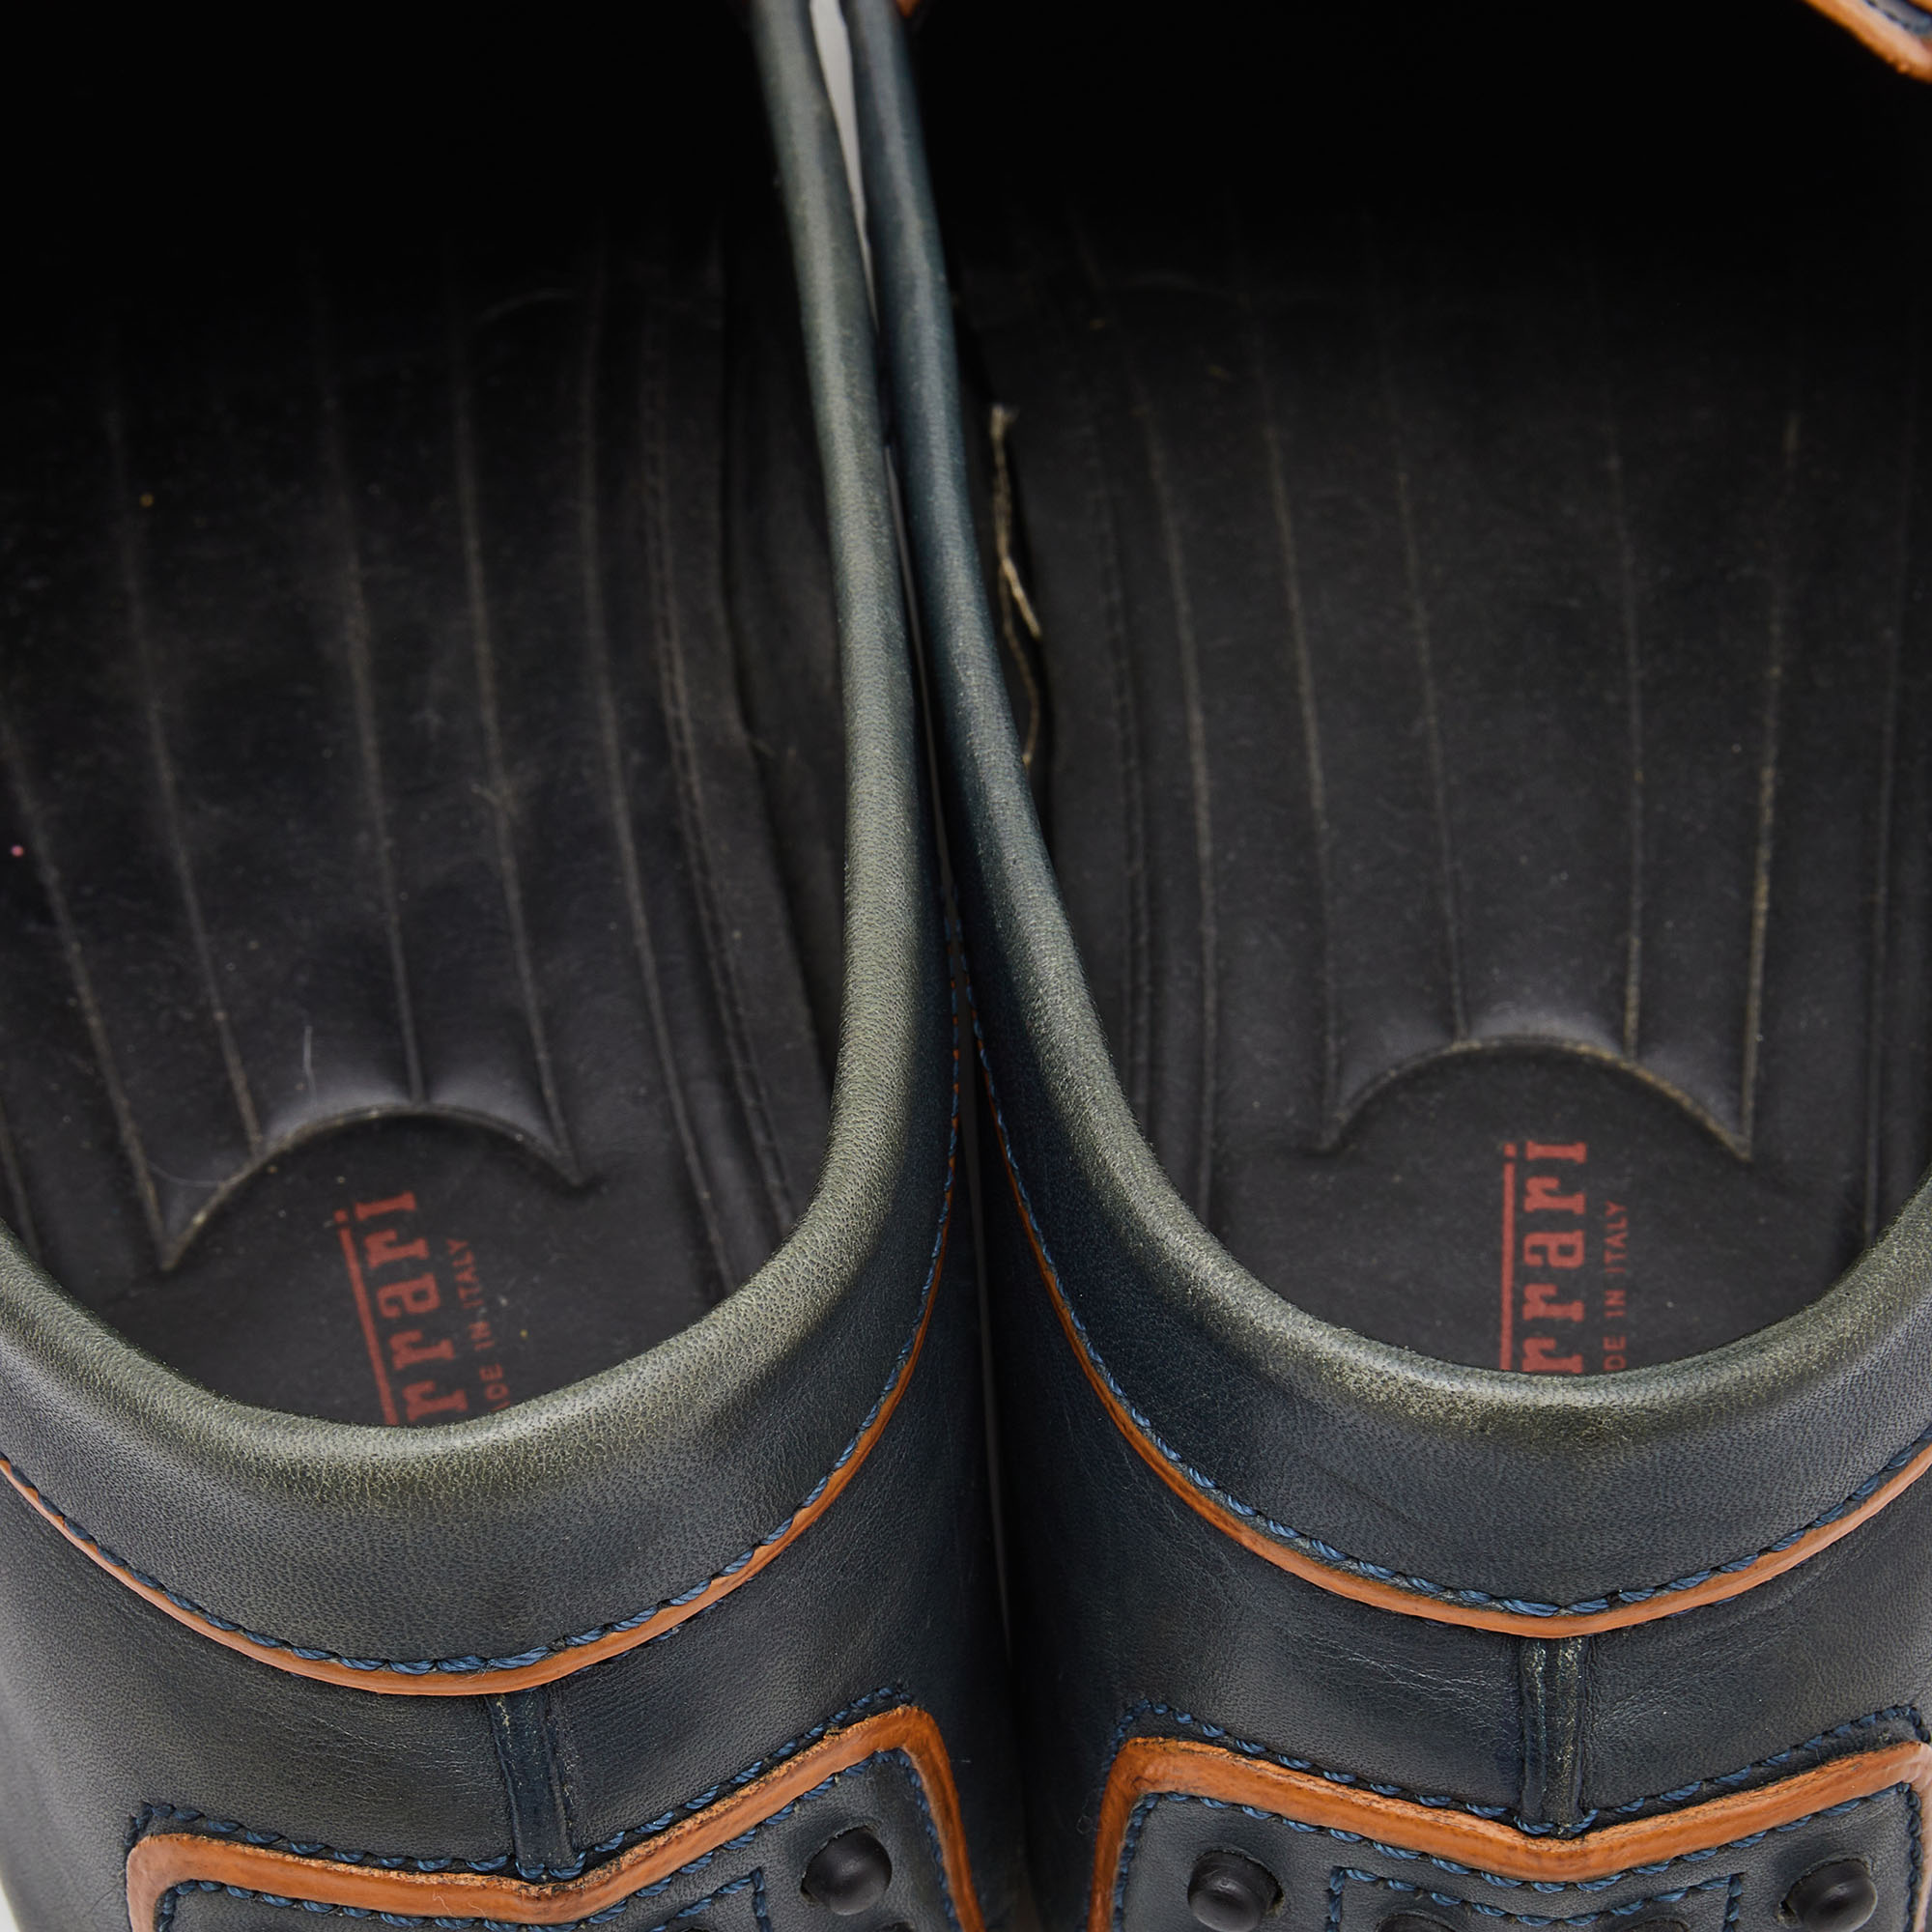 Tod's Dark Grey/Orange Leather Gommino Slip On Loafers Size 42